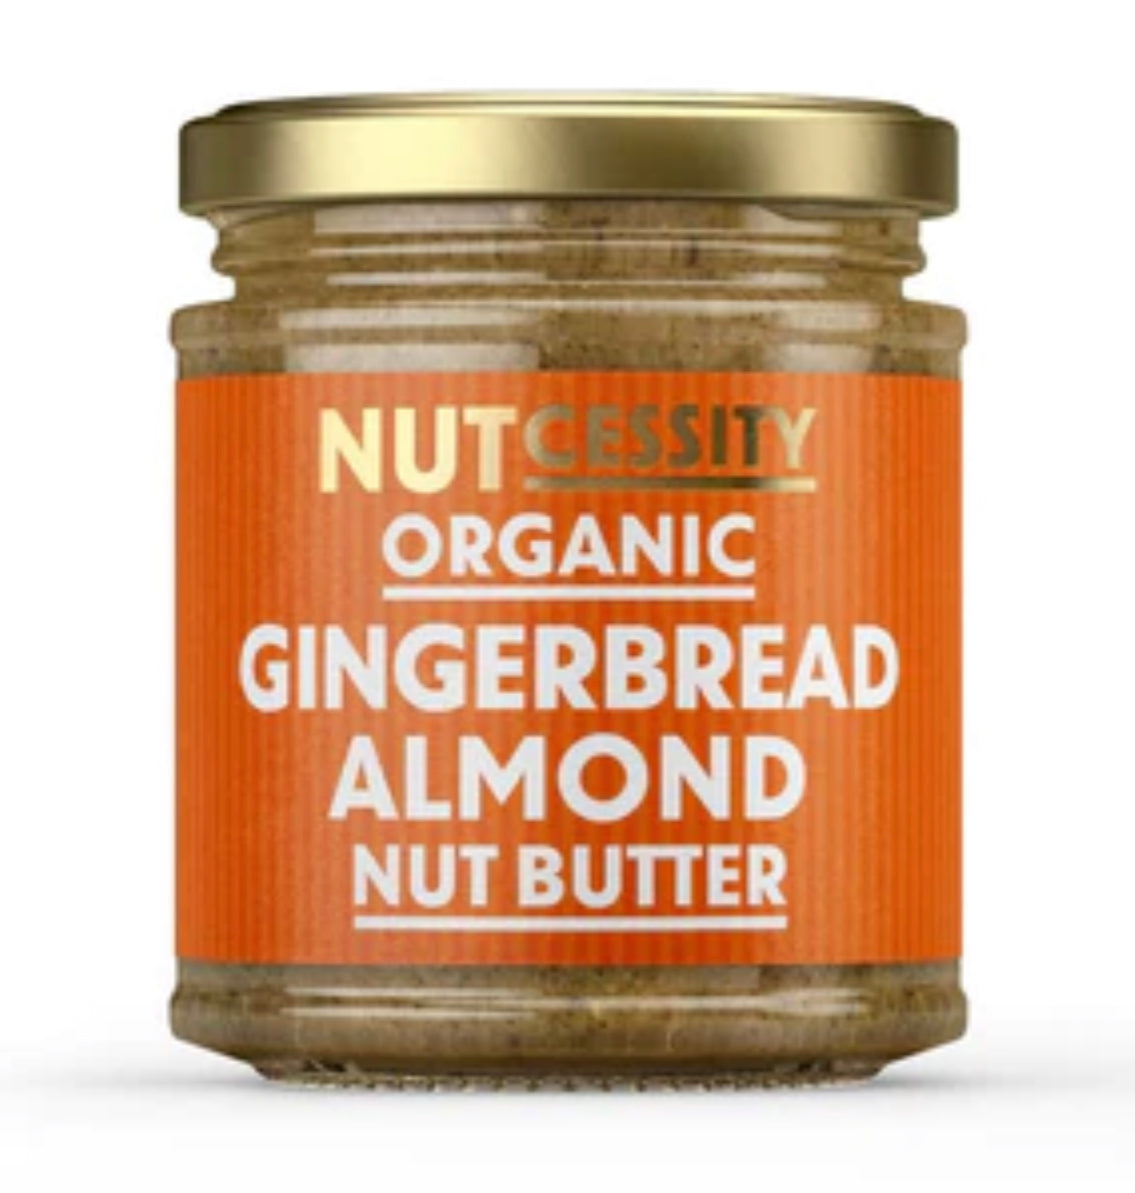 Nutcessity - Organic Gingerbread Almond Nut Butter - 170g